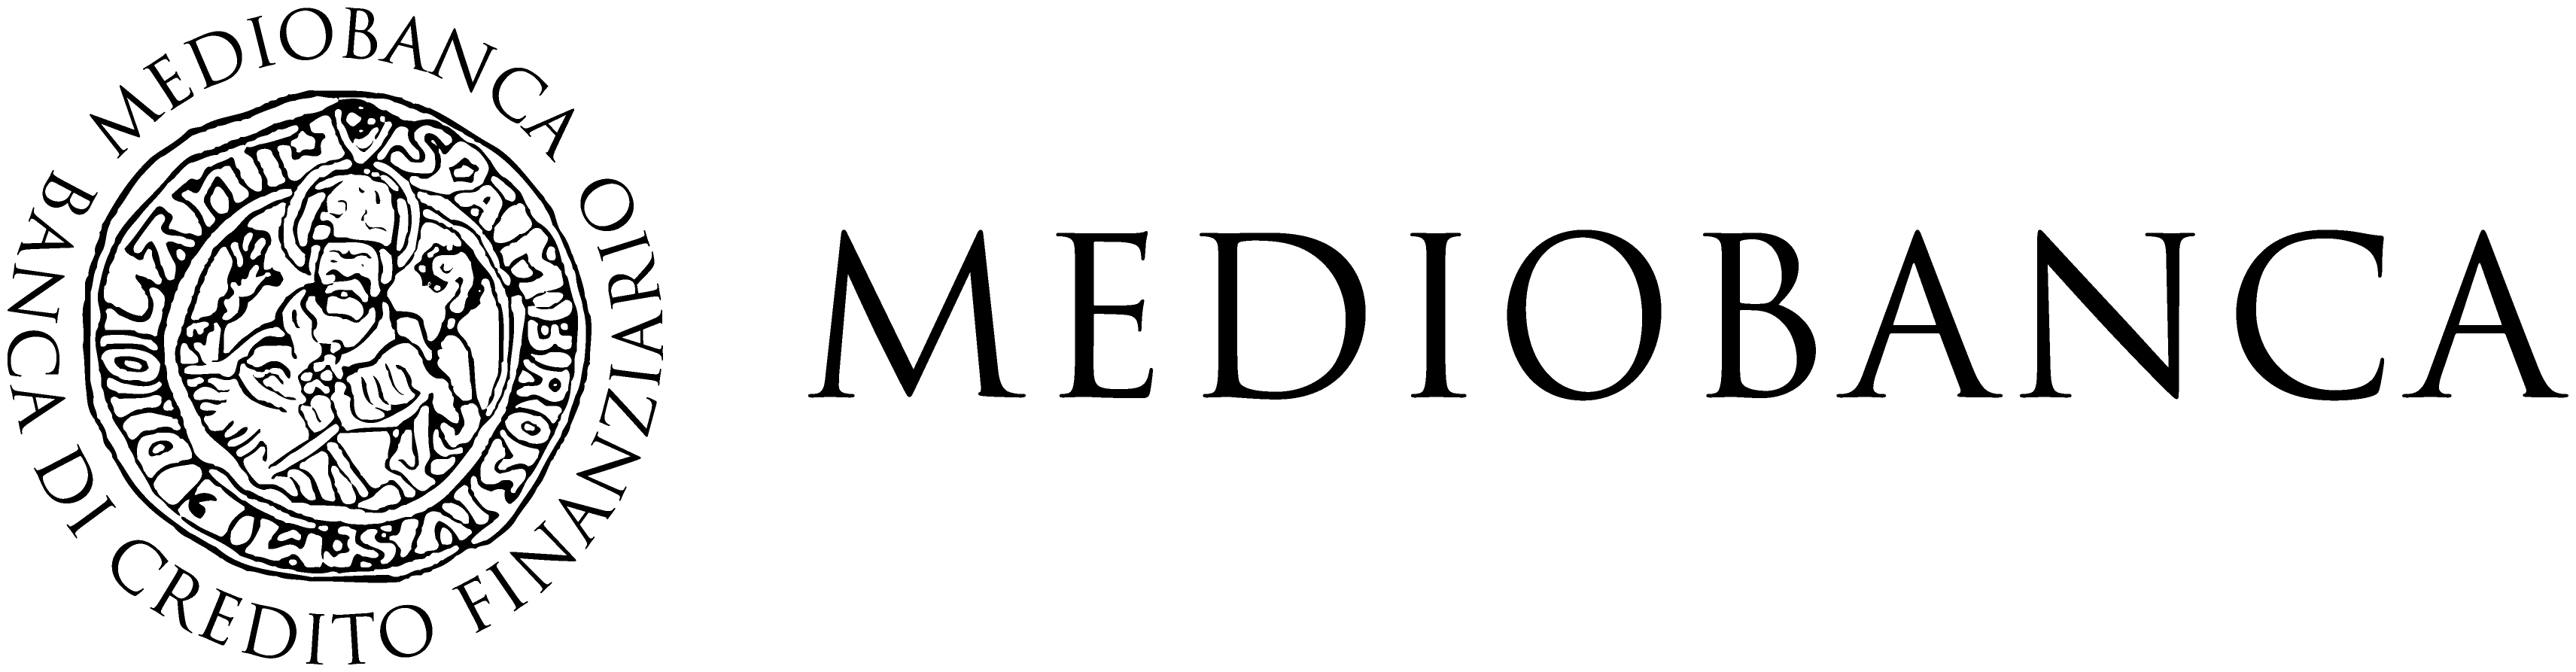 Mediobanca Brand Logo